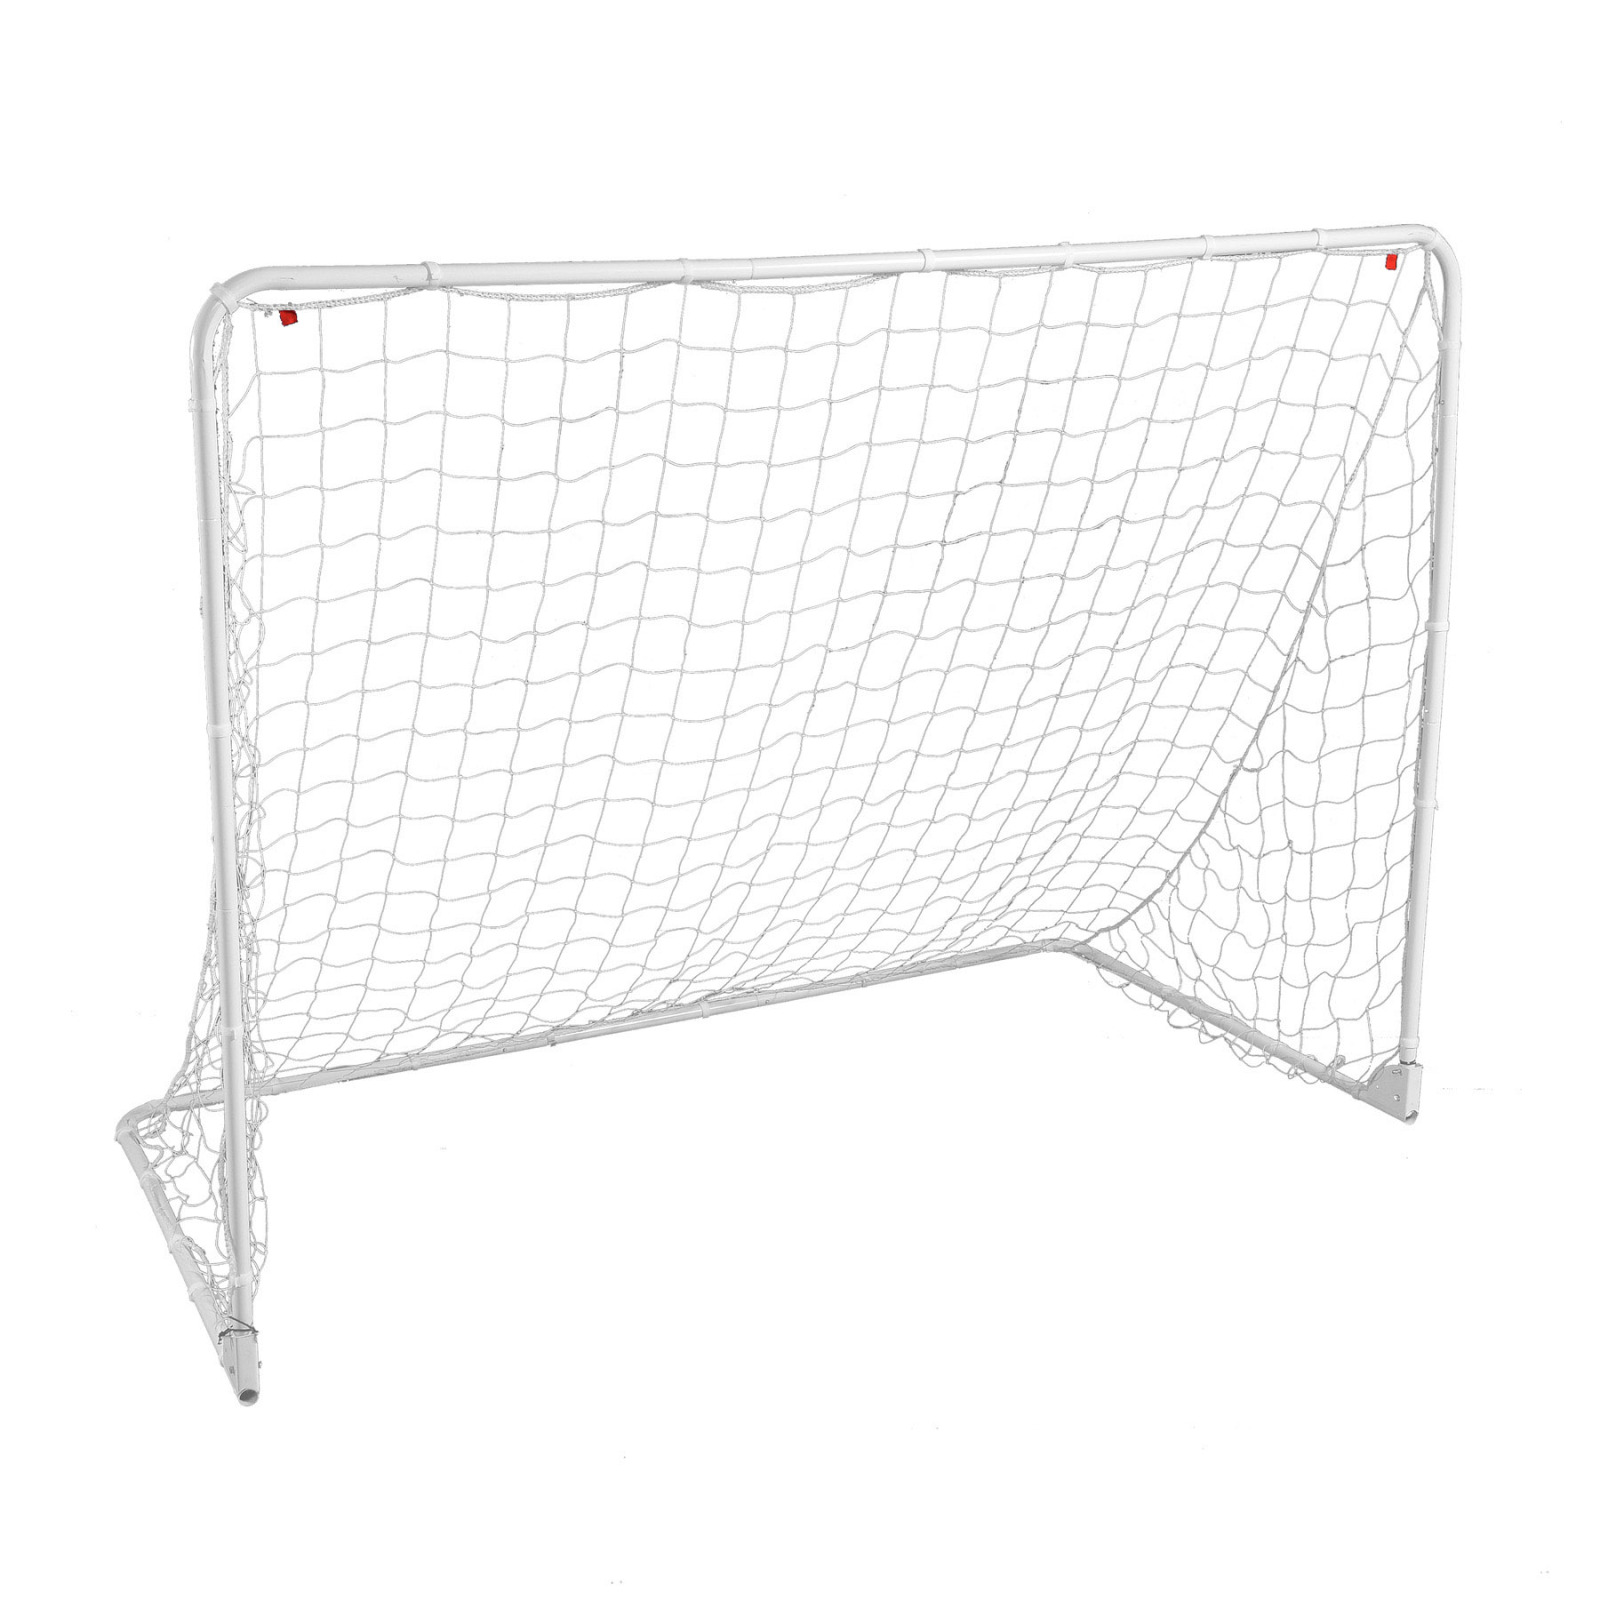 Lion Sports 6' x 3' Folding Soccer Goal Net